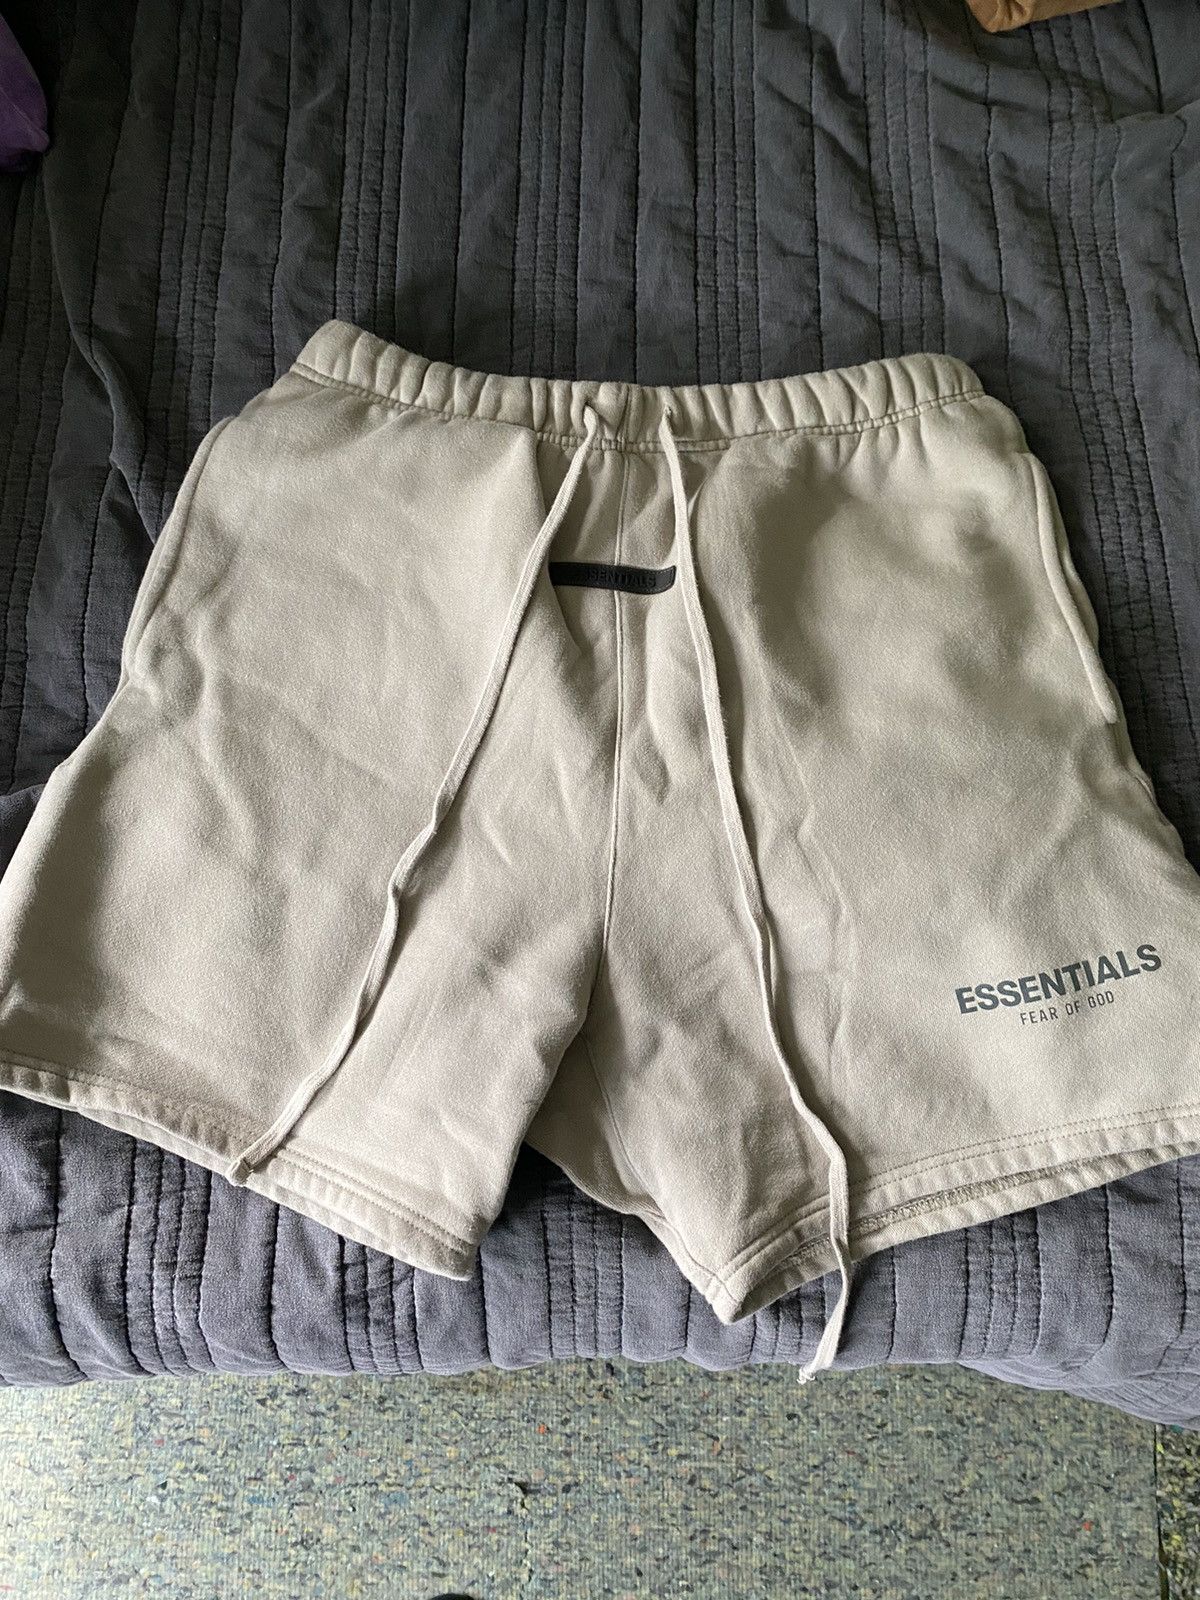 Fear of God Fear of god Essential sweat shorts | Grailed